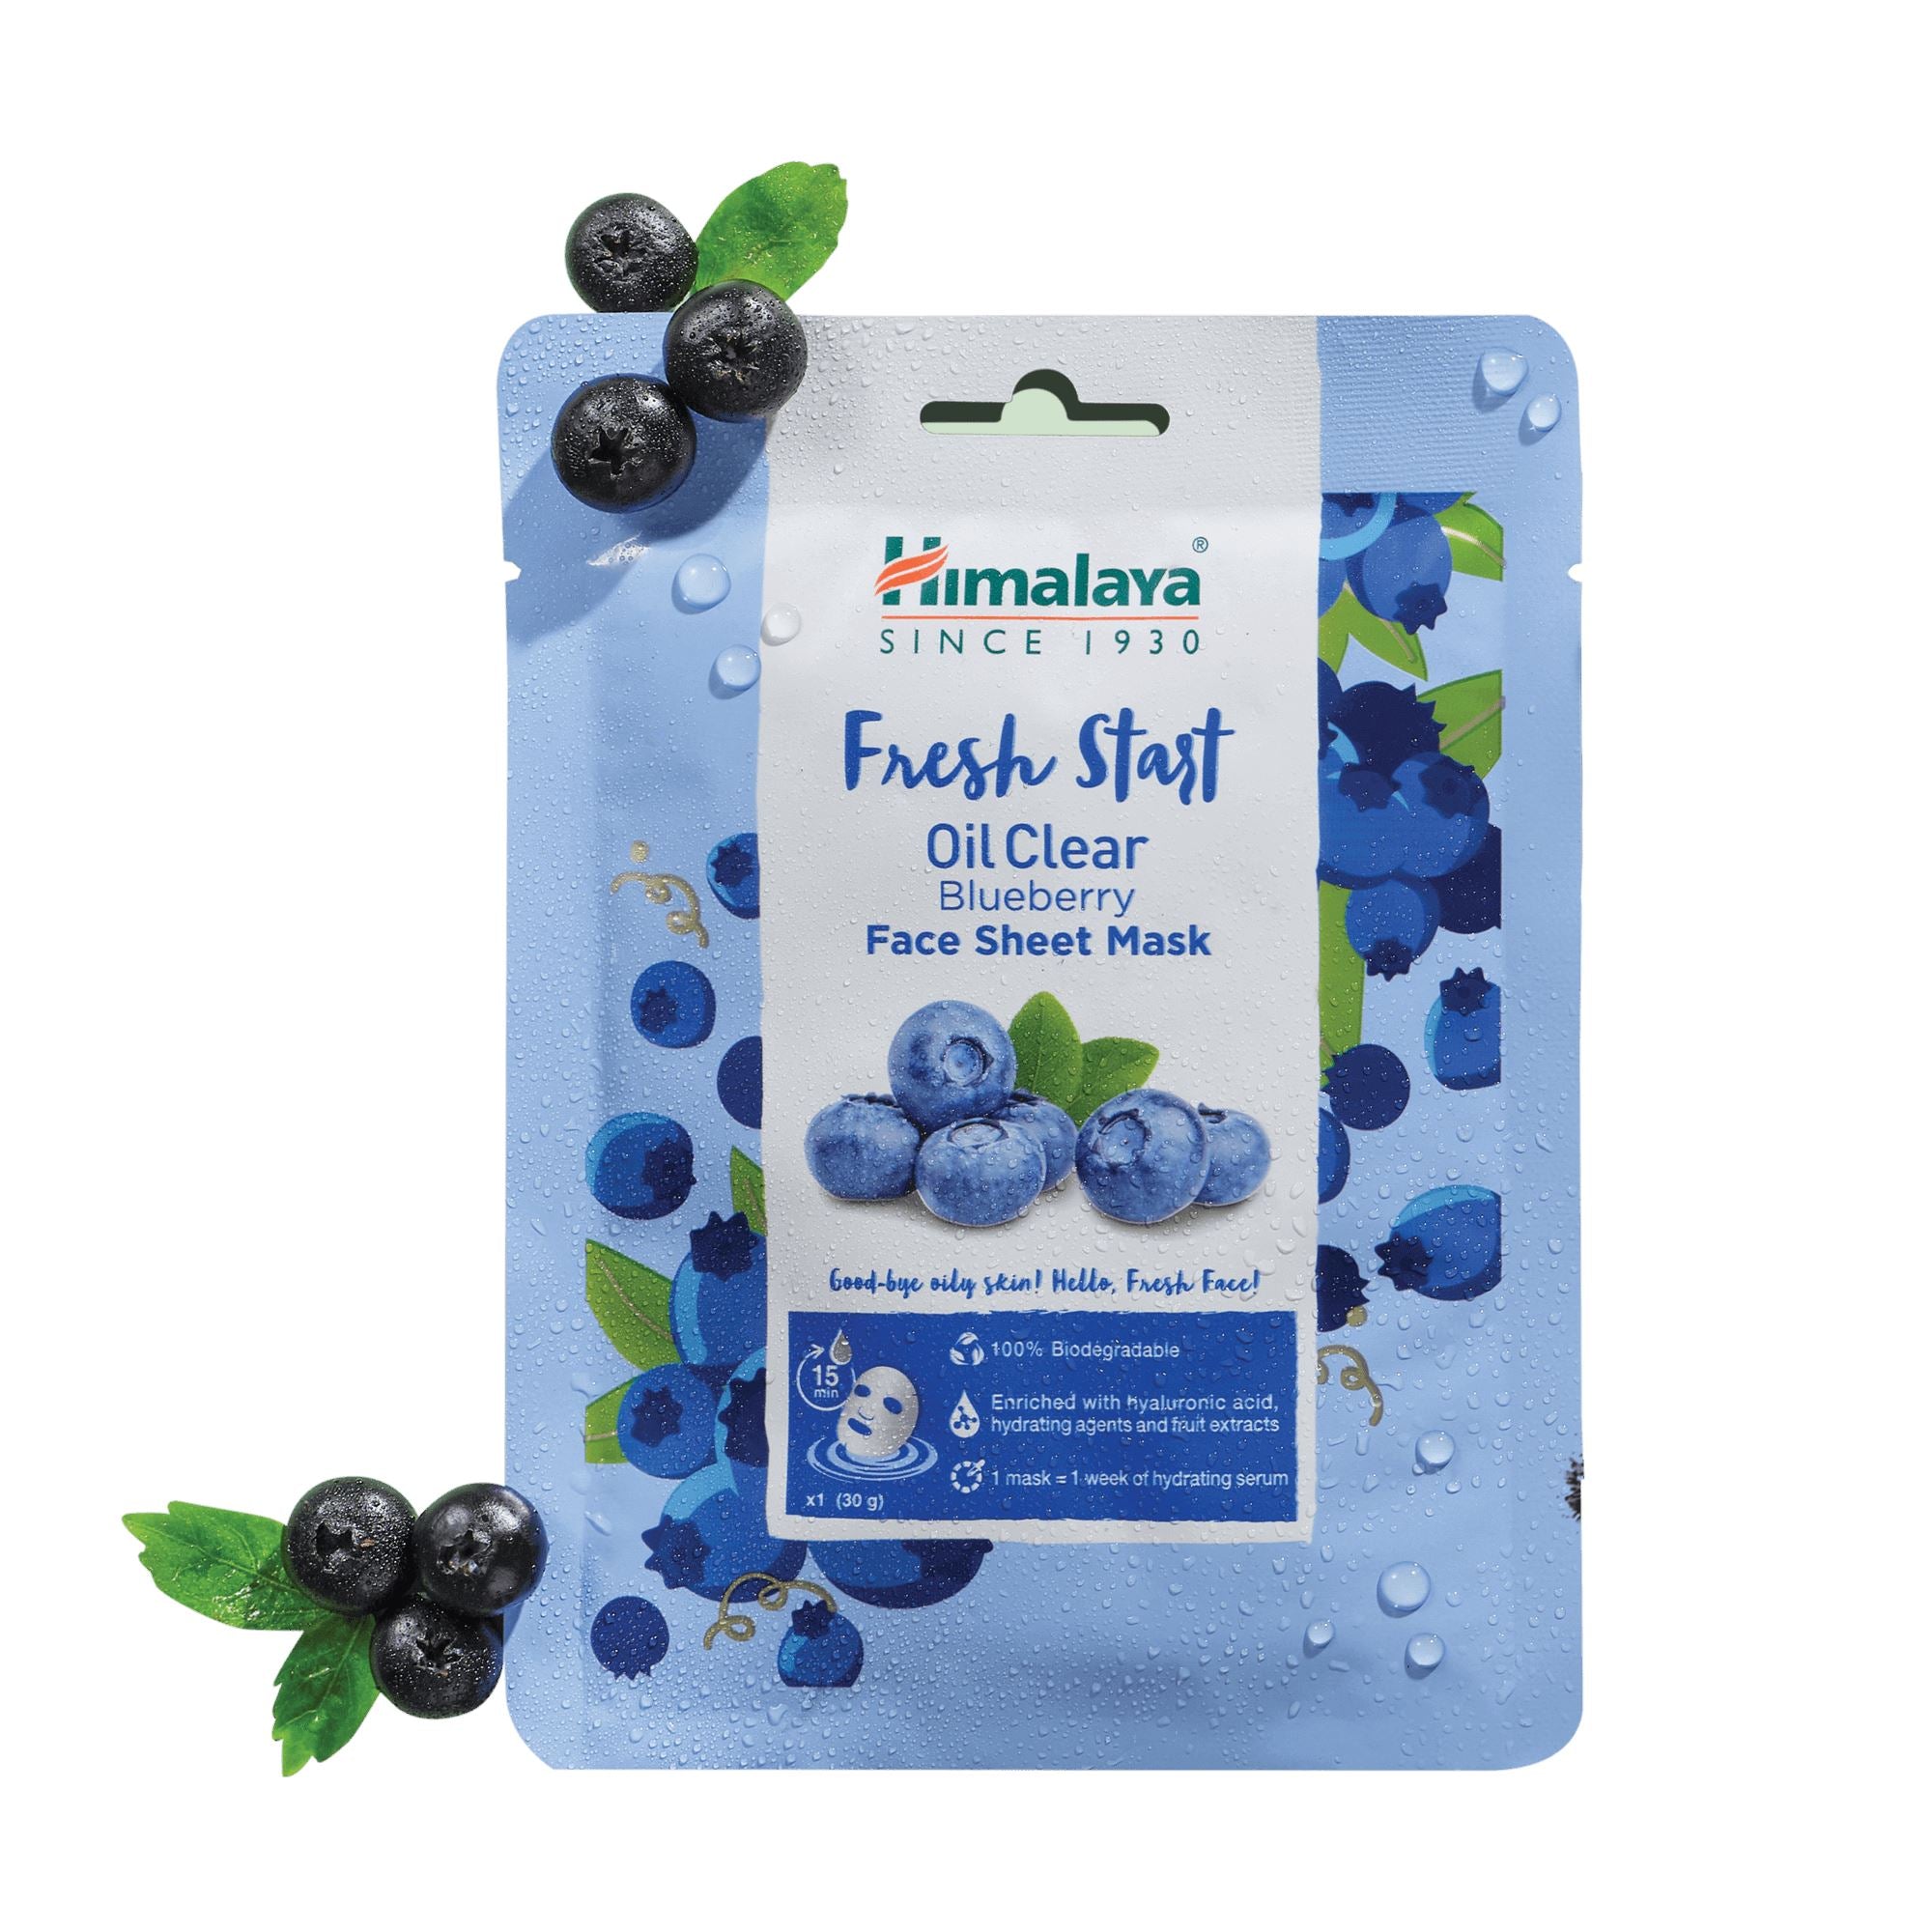 Himalaya Fresh Start Oil Clear Blueberry Face Sheet Mask